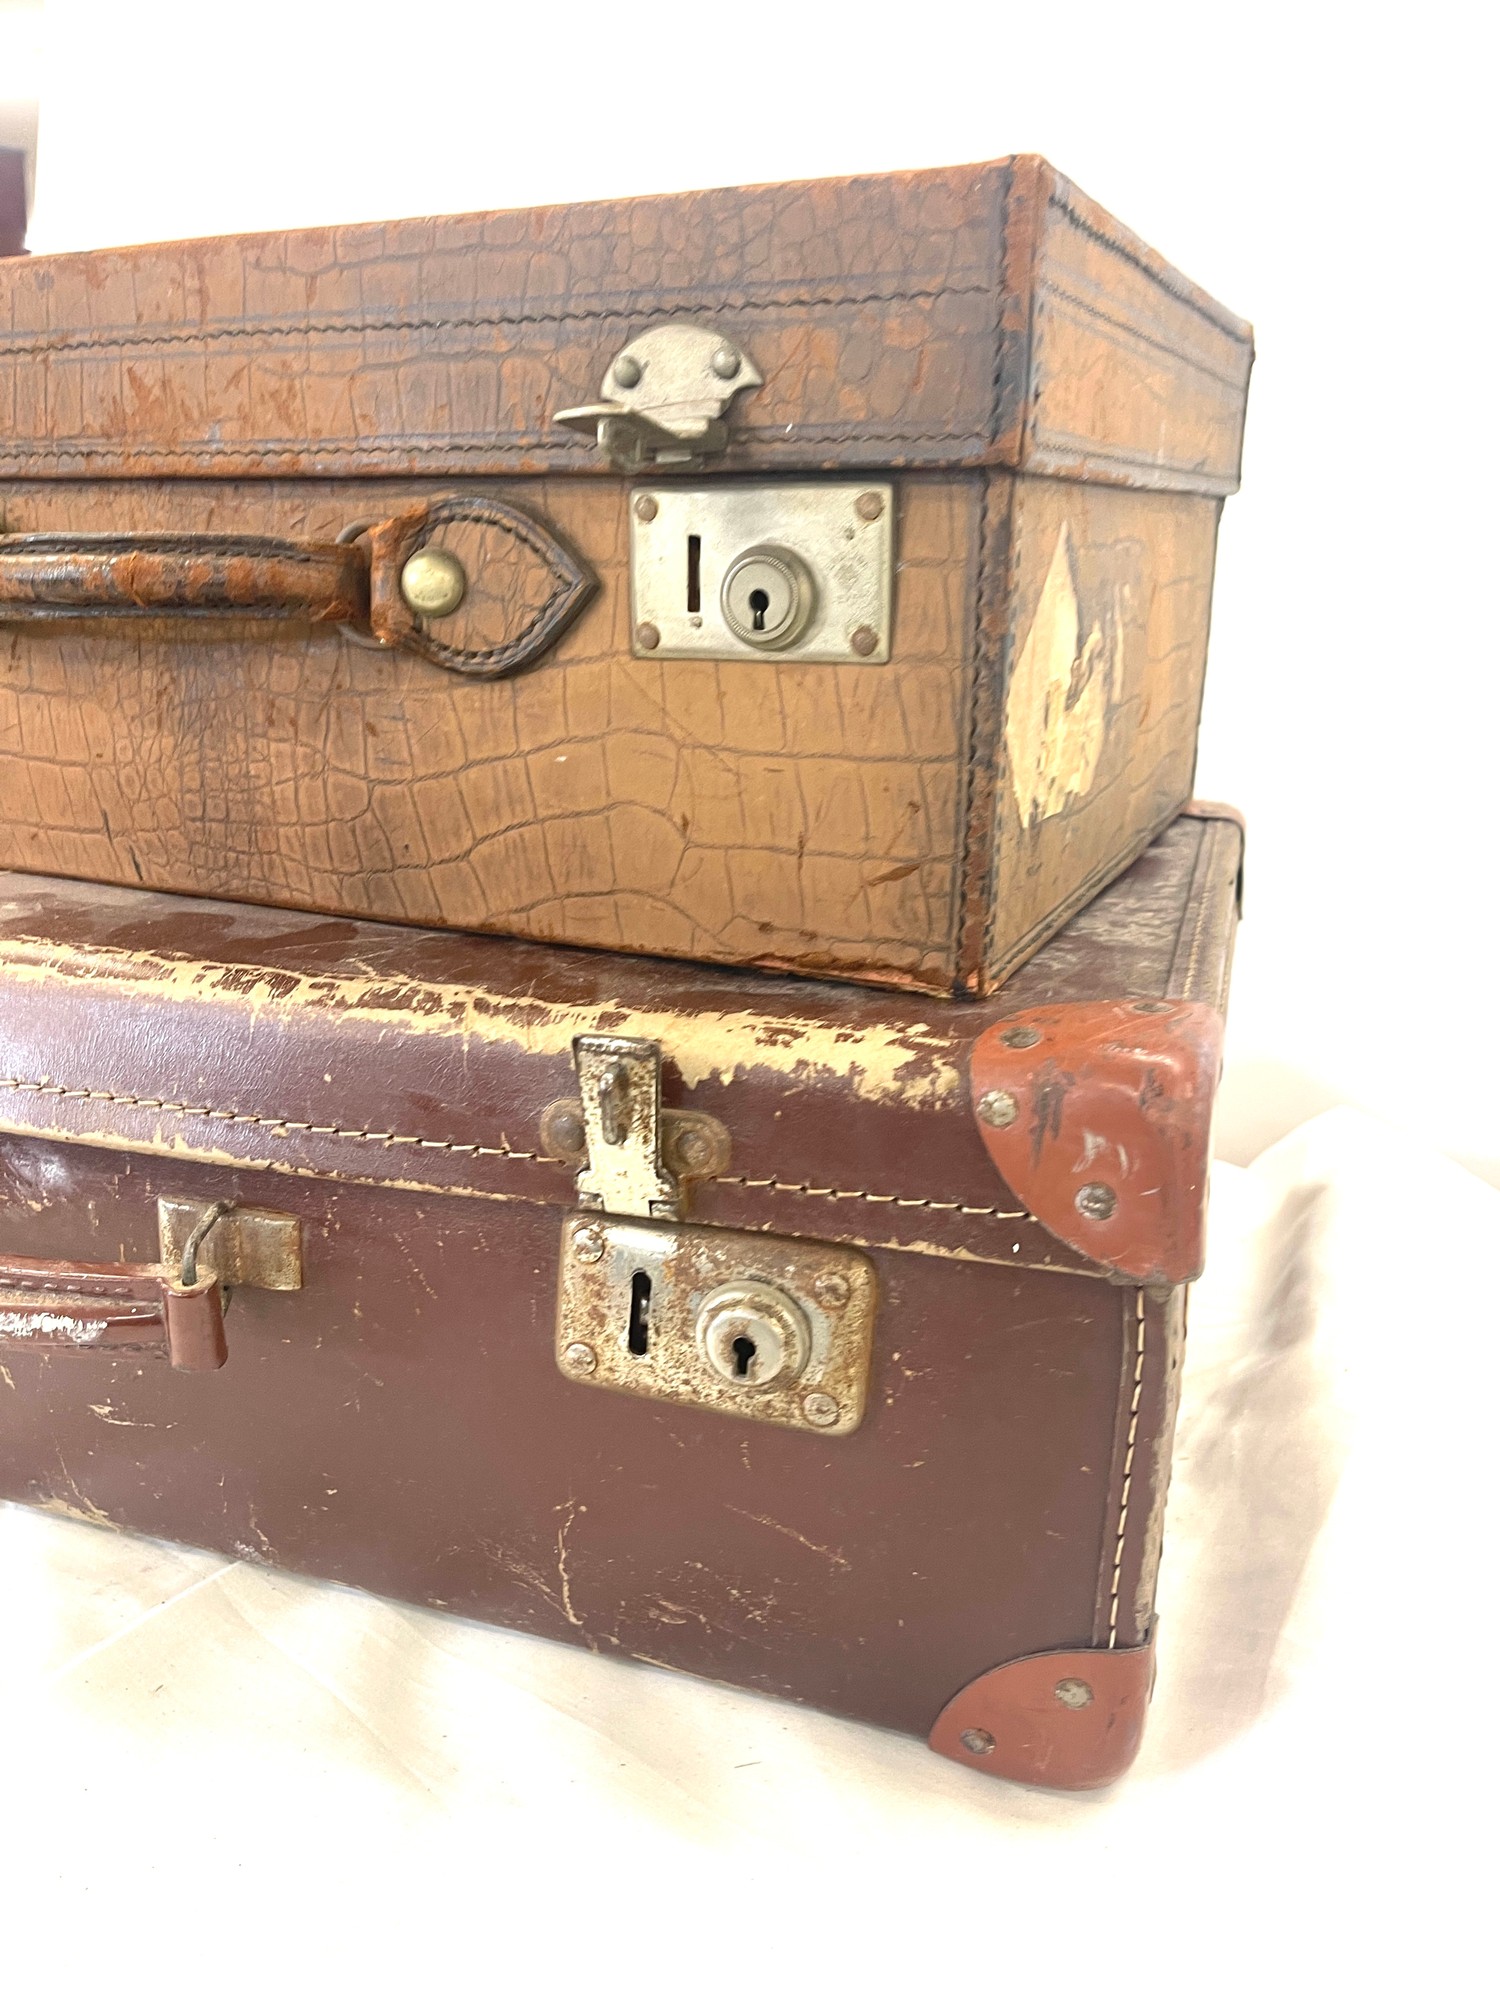 2 Vintage travel cases - Image 2 of 2